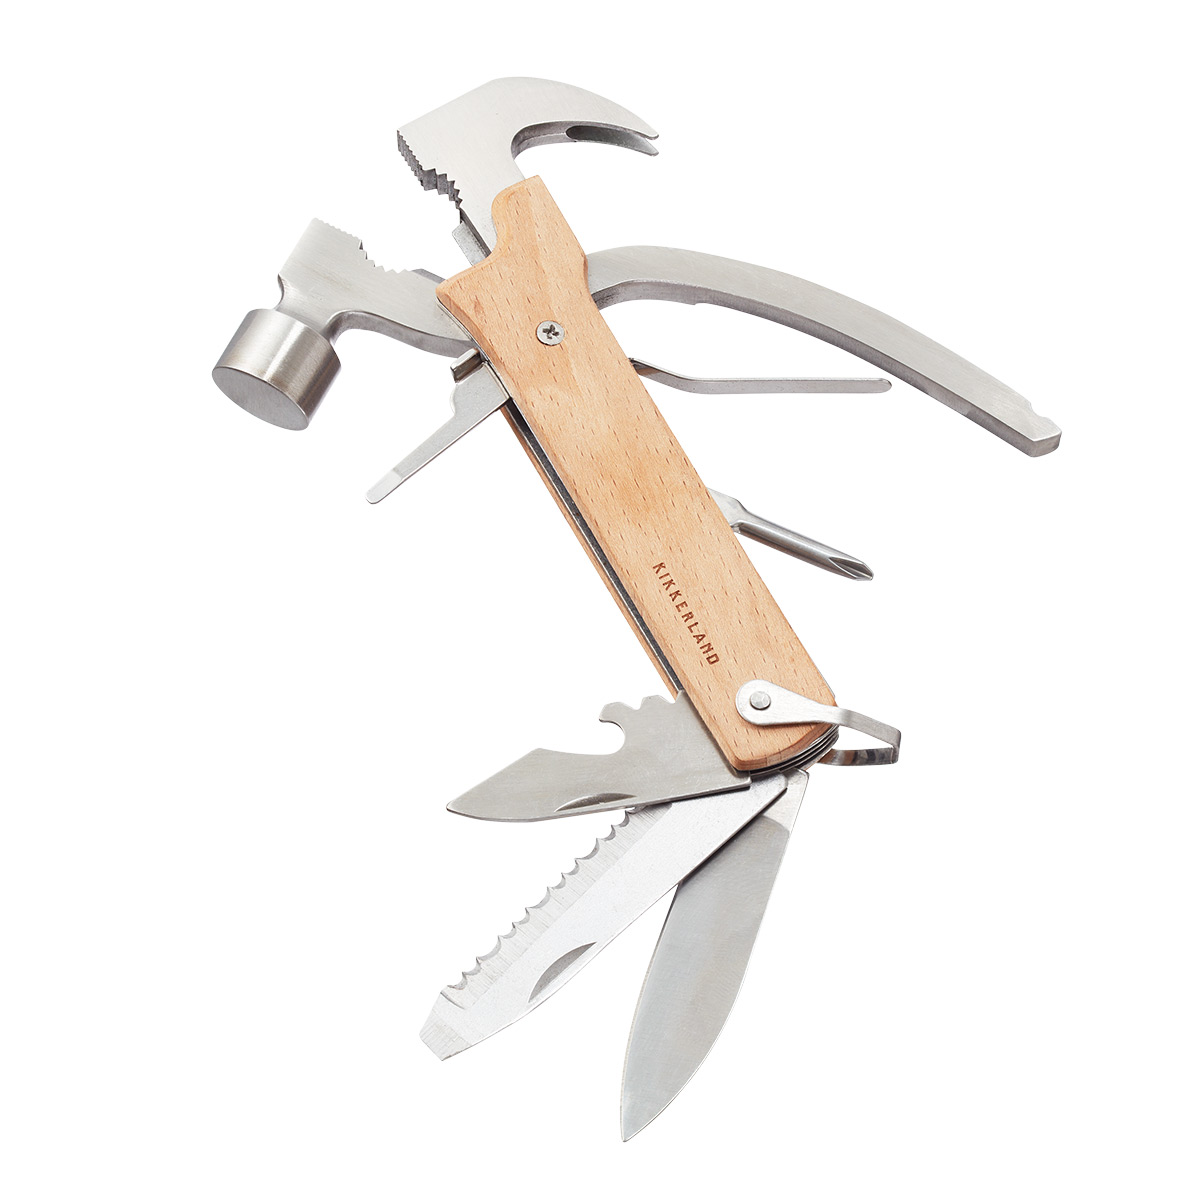 Kikkerland Pocket 10 in 1 Wood Stainless Steel Hammer Multi Tool Screwdriver for sale online 